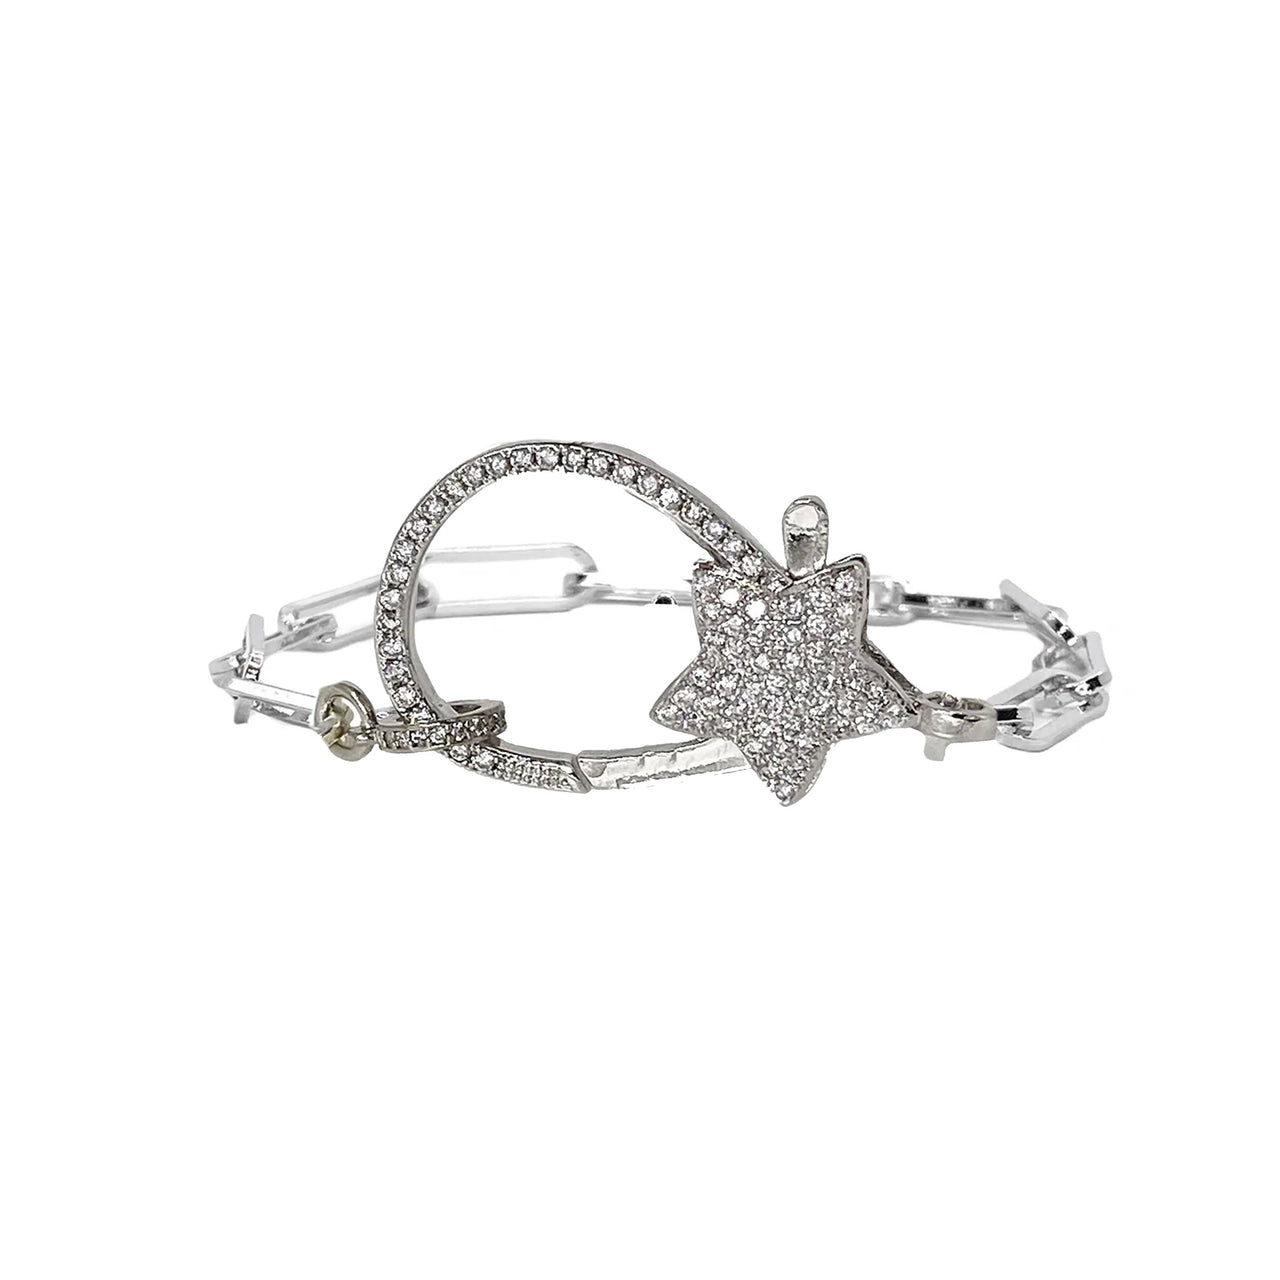 The Star's Paperclip Link Bracelet